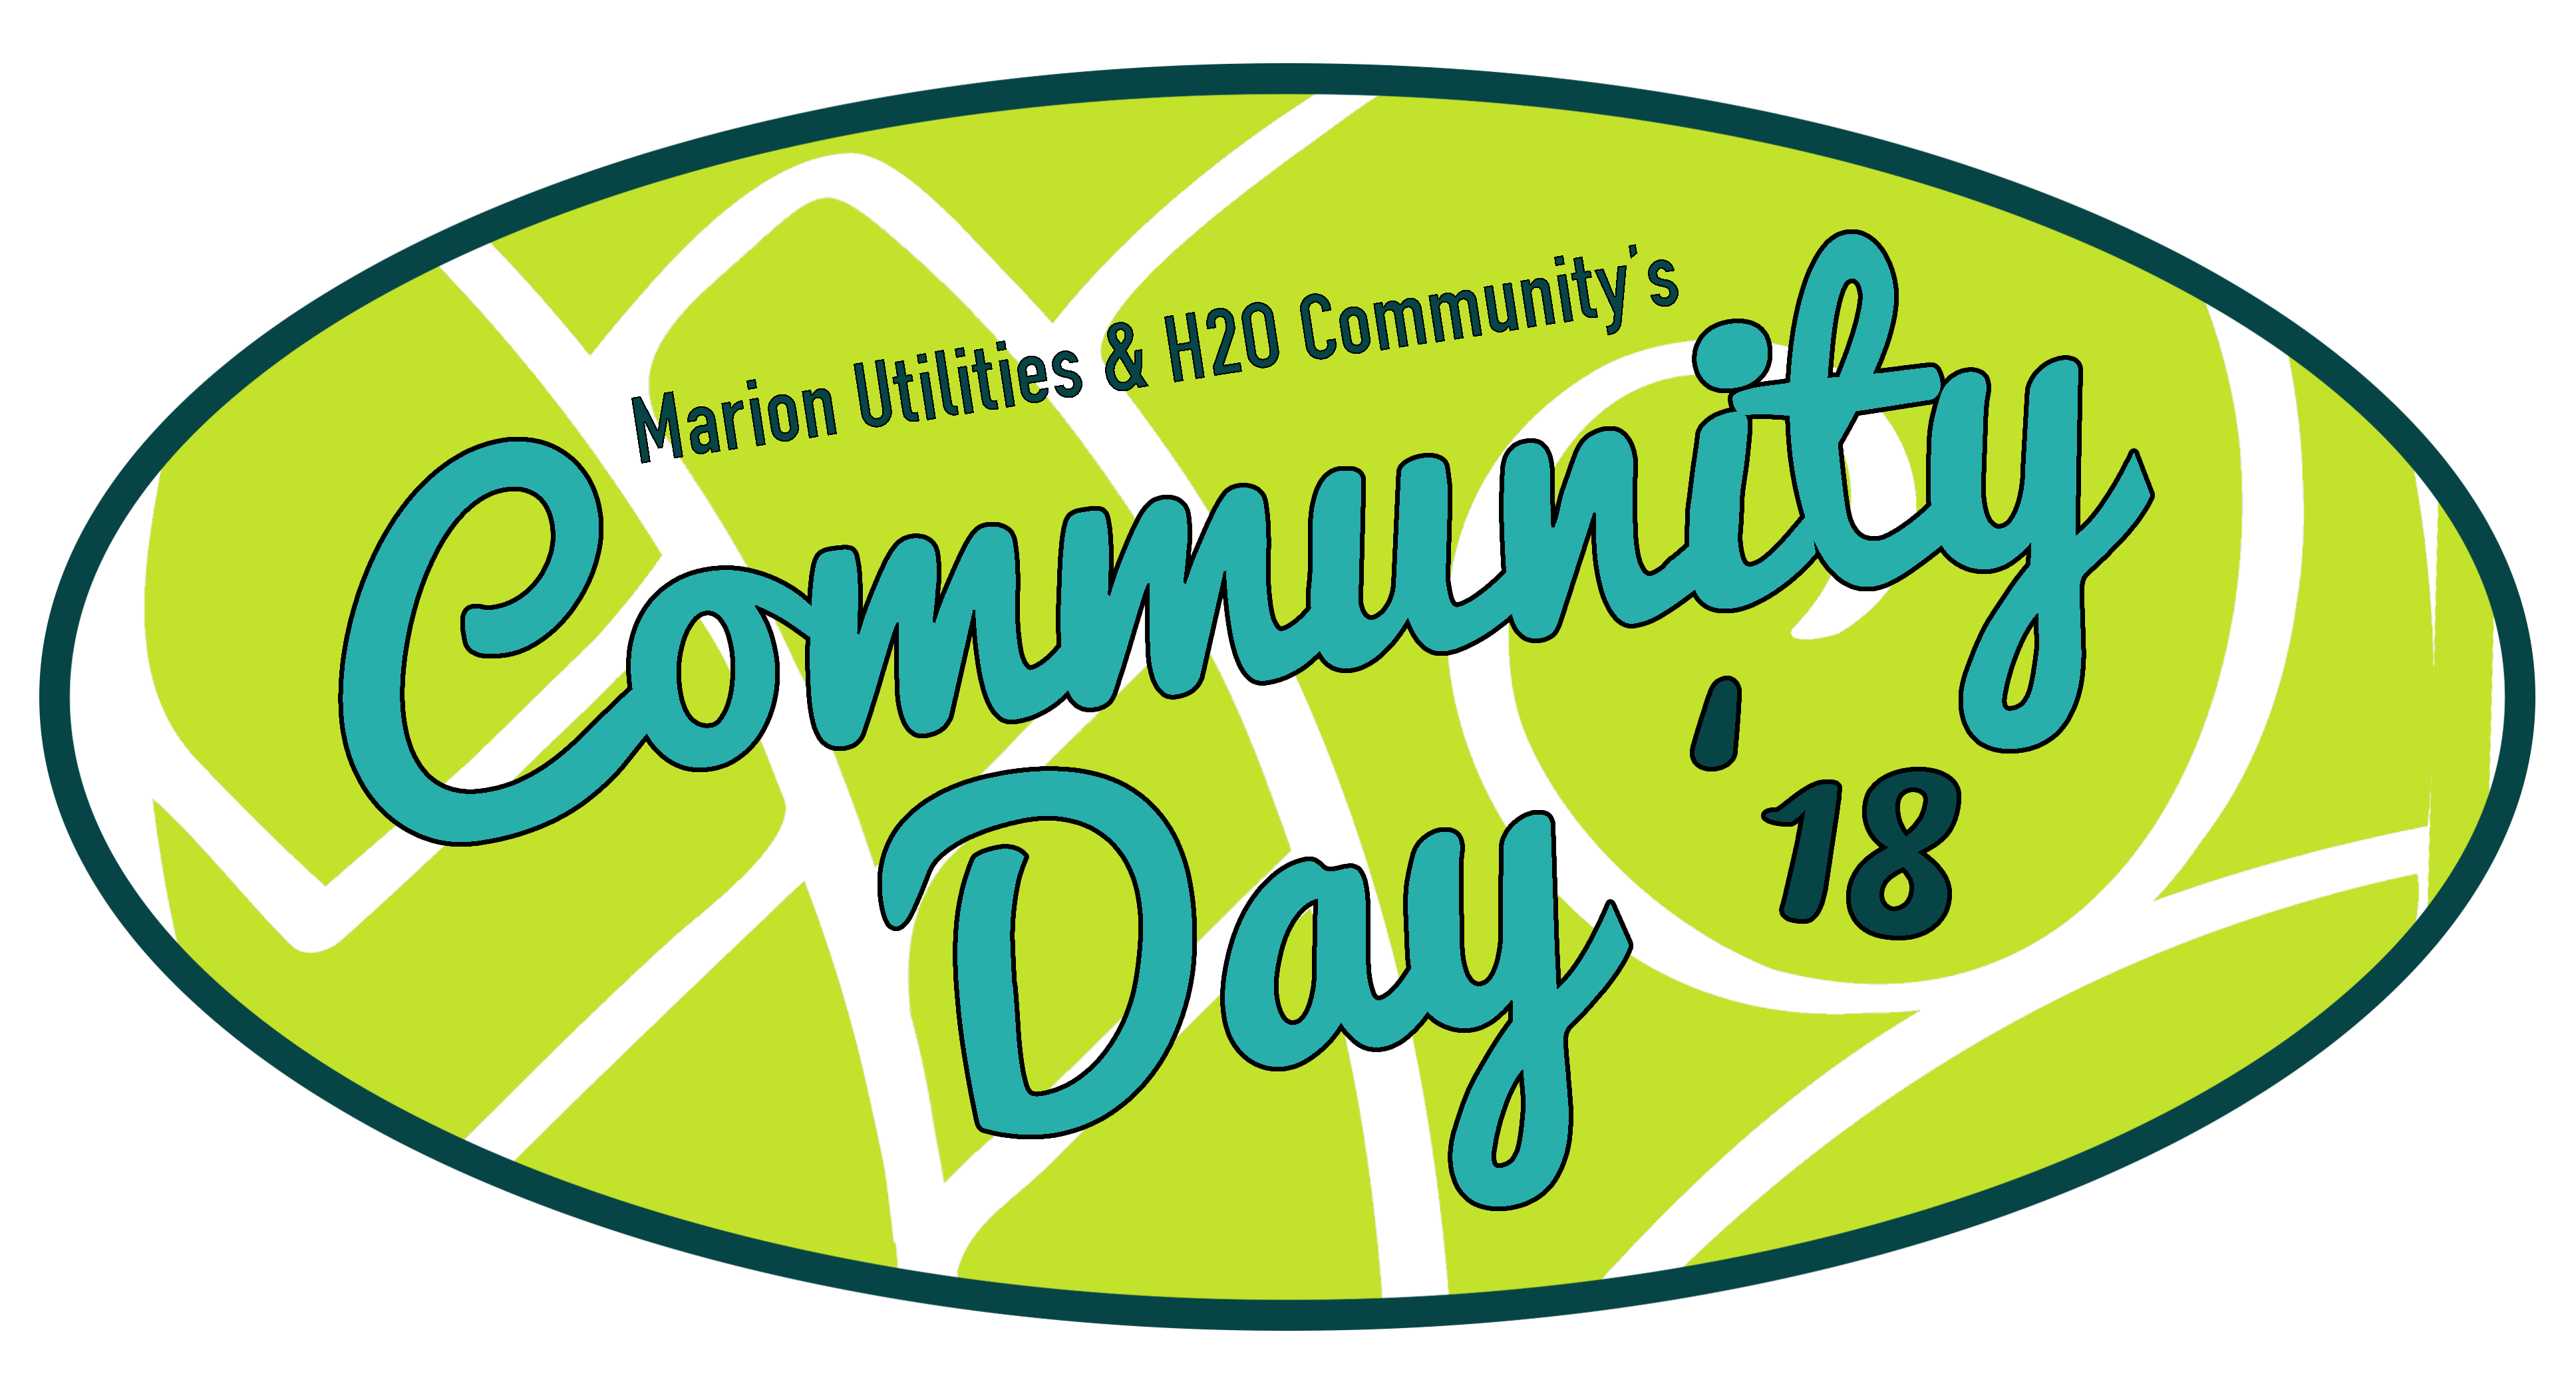 Community clipart community day, Community community day Transparent